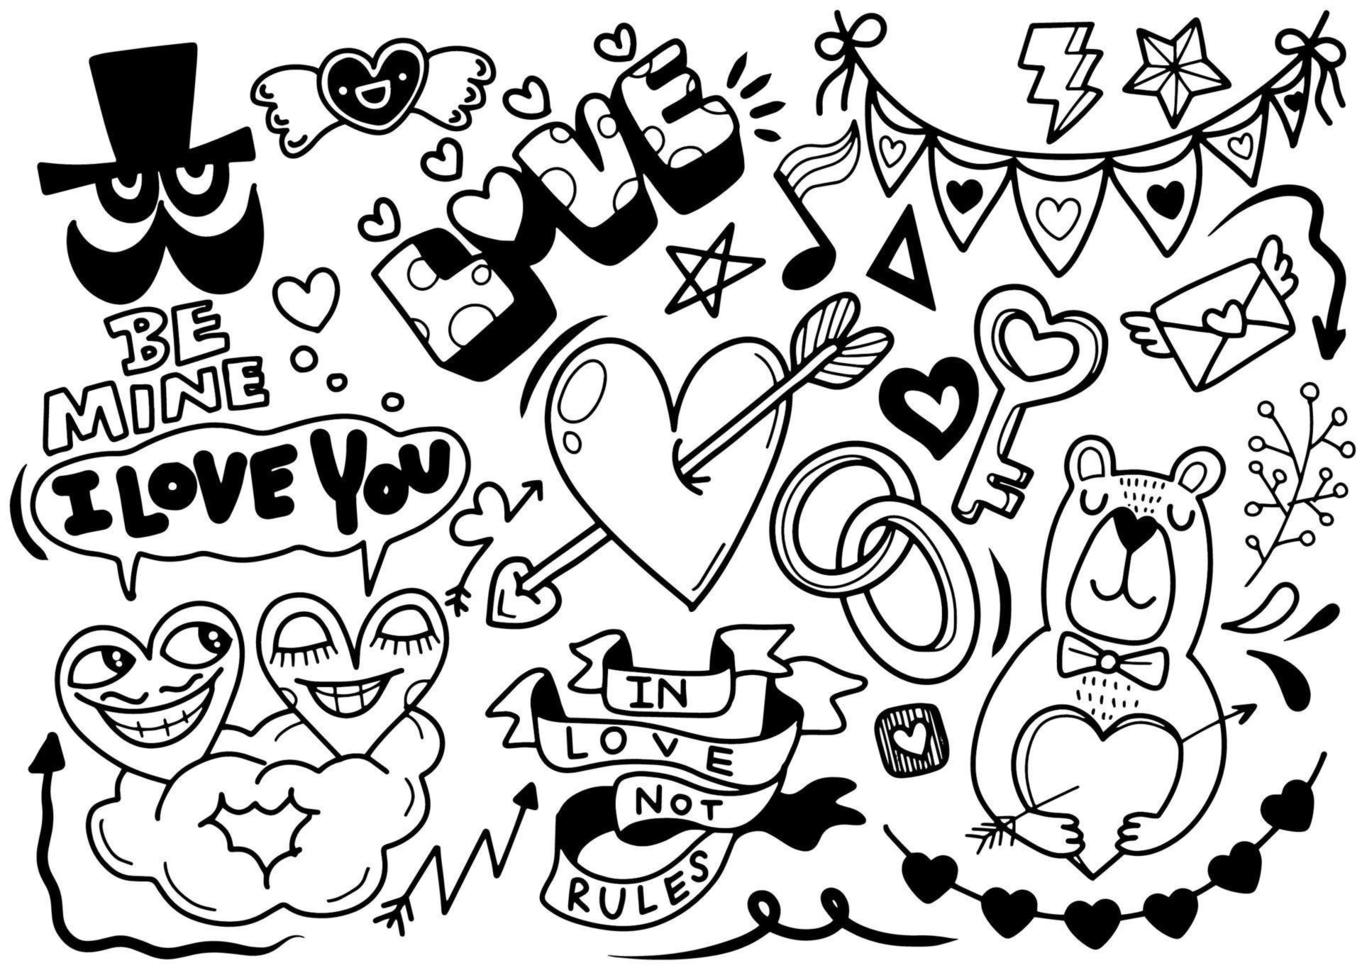 Love doodles background vector